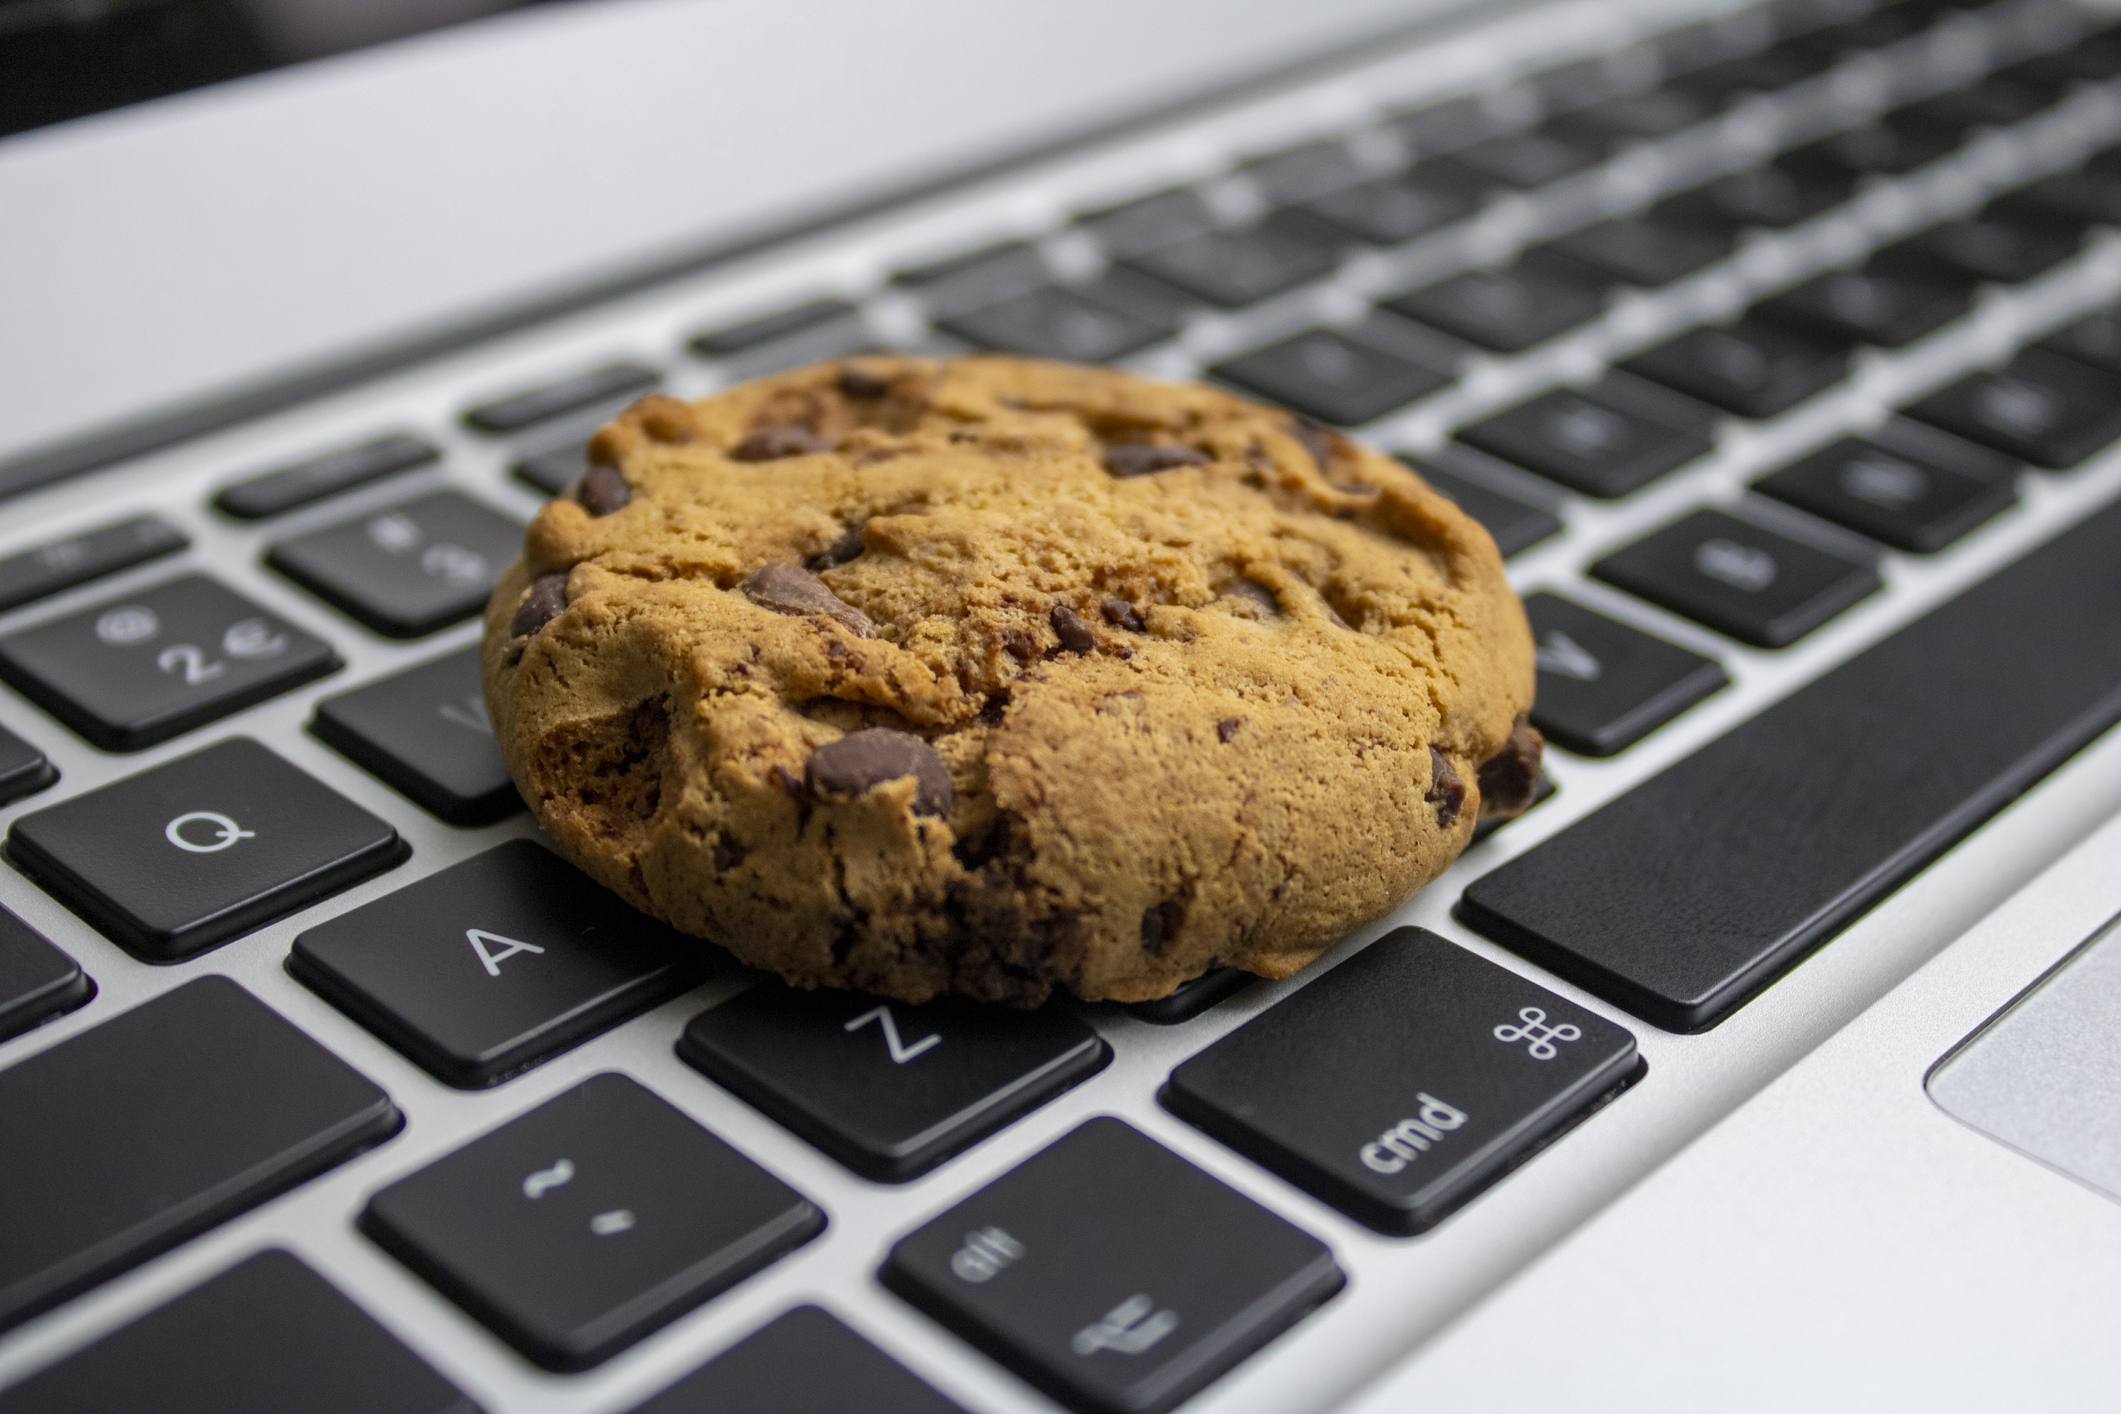 Windows cookies. Cookie интернет. Печенье кукис. Куки это что в интернете. Файлы кукис.